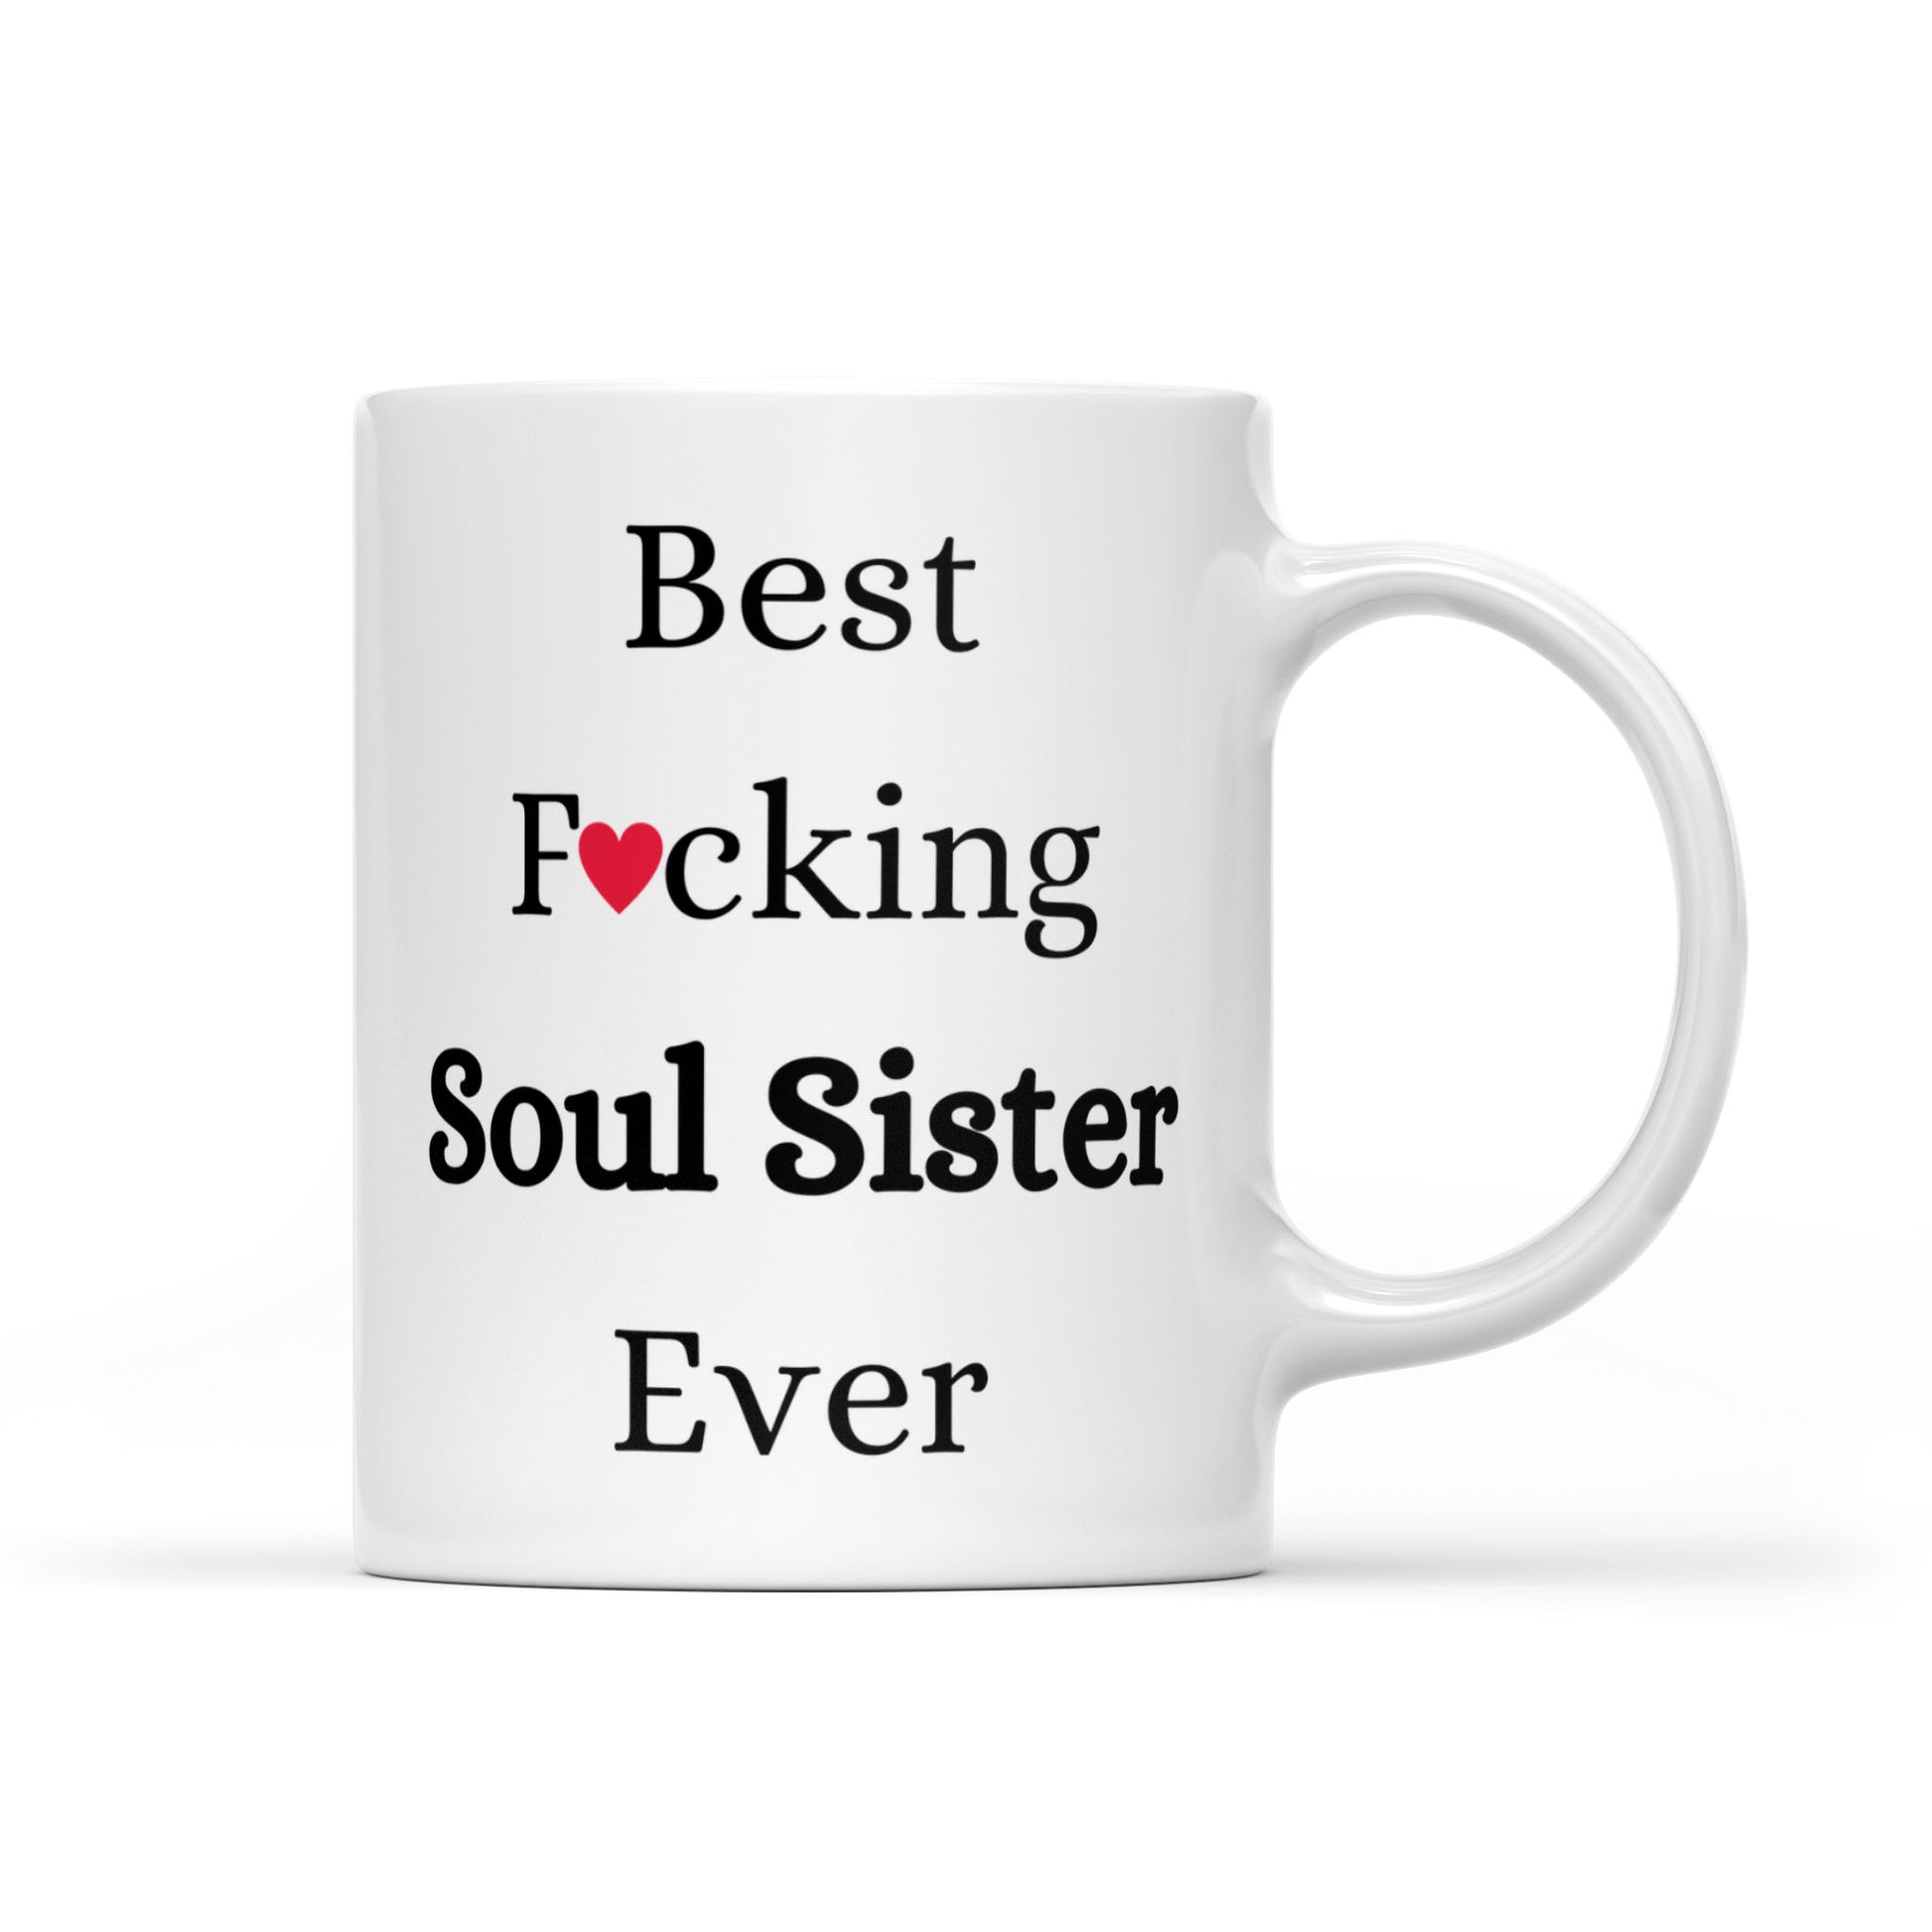 Best Fucking Soul Sister Ever Mug